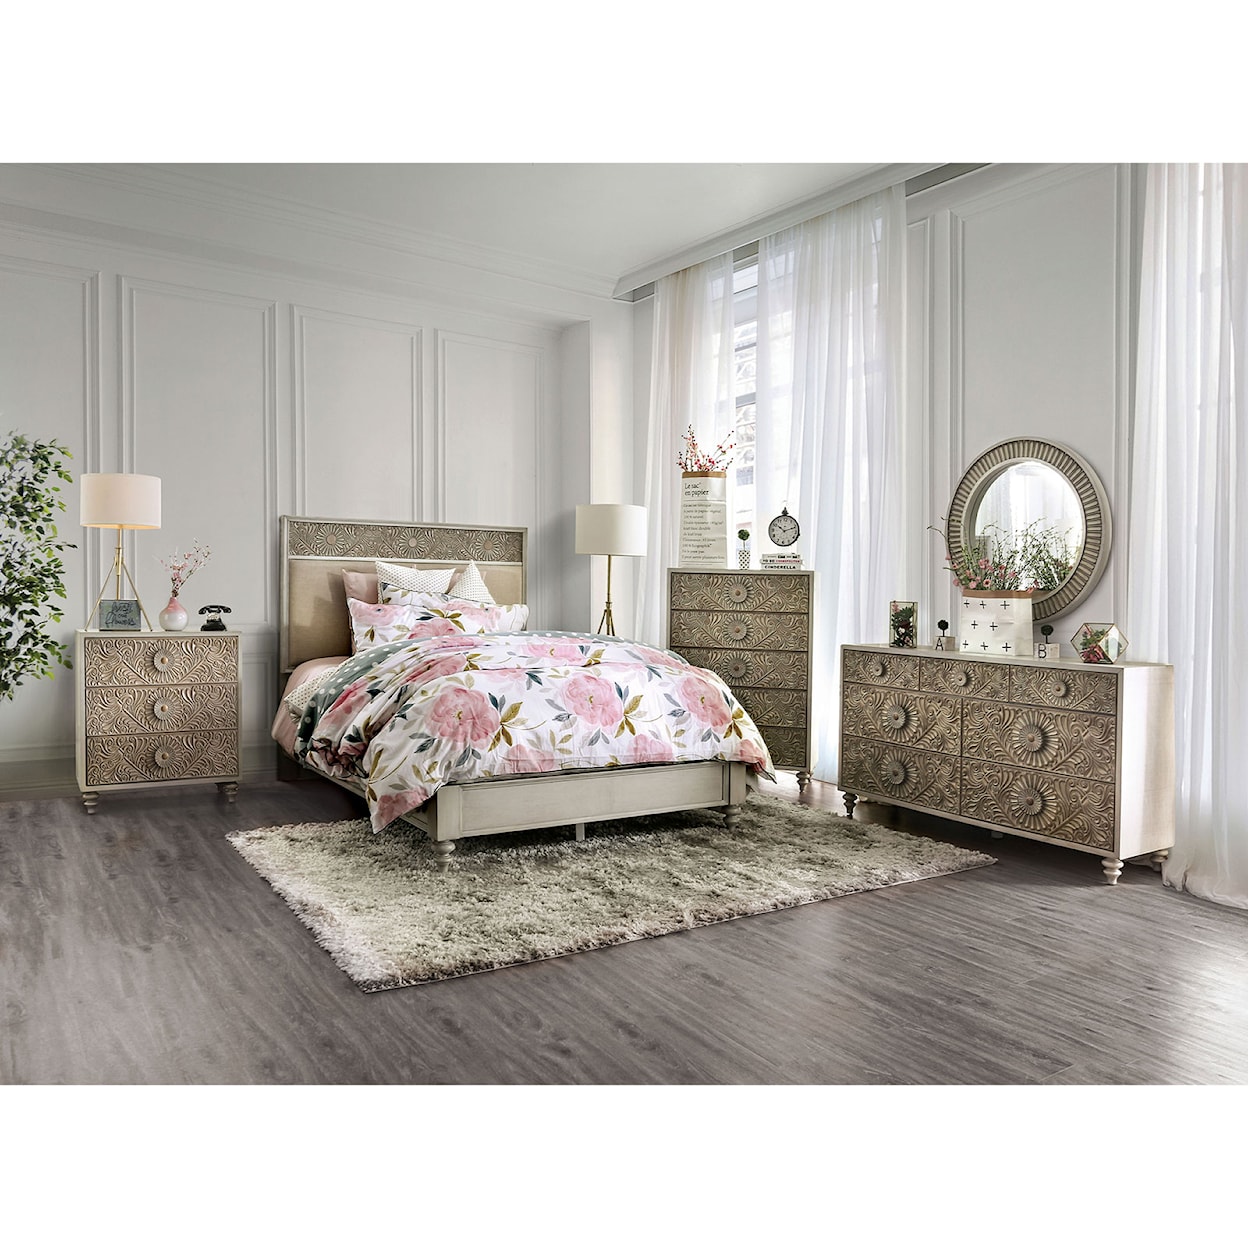 Furniture of America Jakarta King Bedroom Set